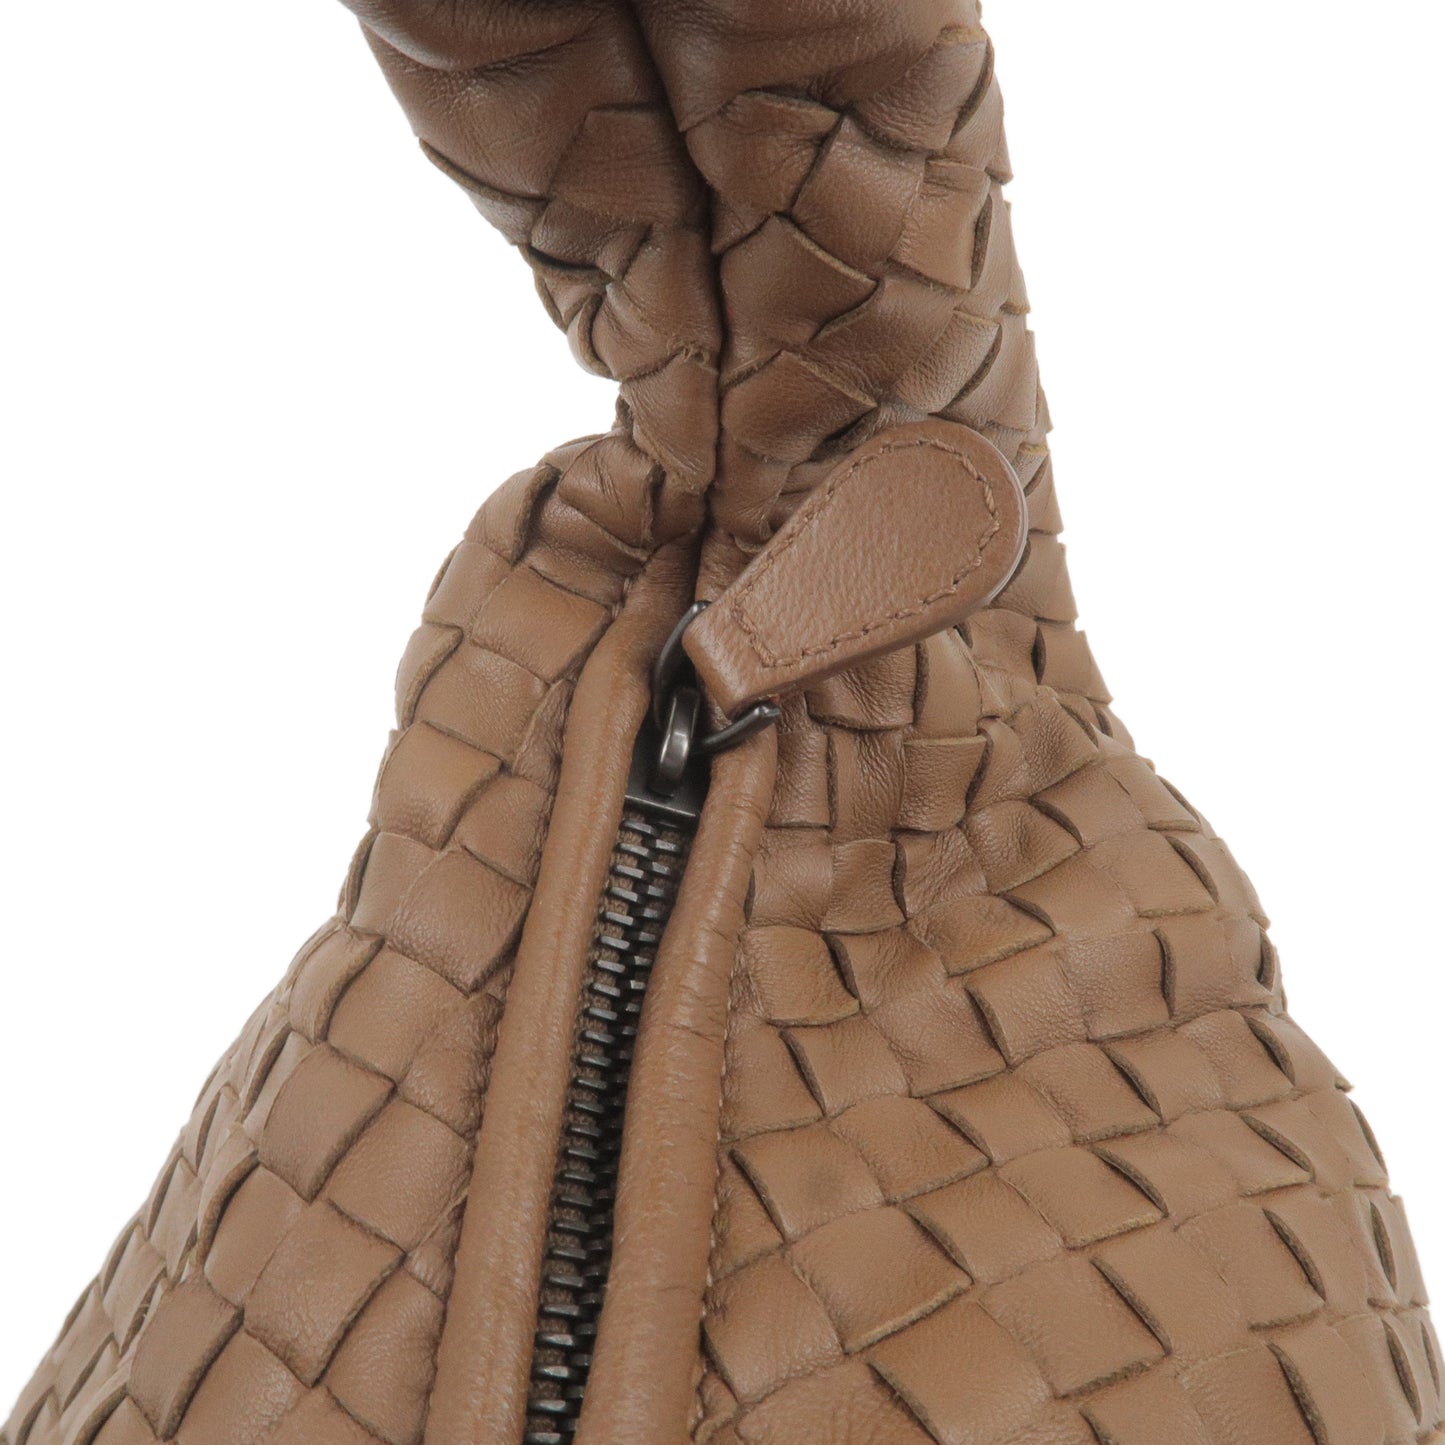 BOTTEGA VENETA Intrecciato Leather Shoulder Bag Brown 232499